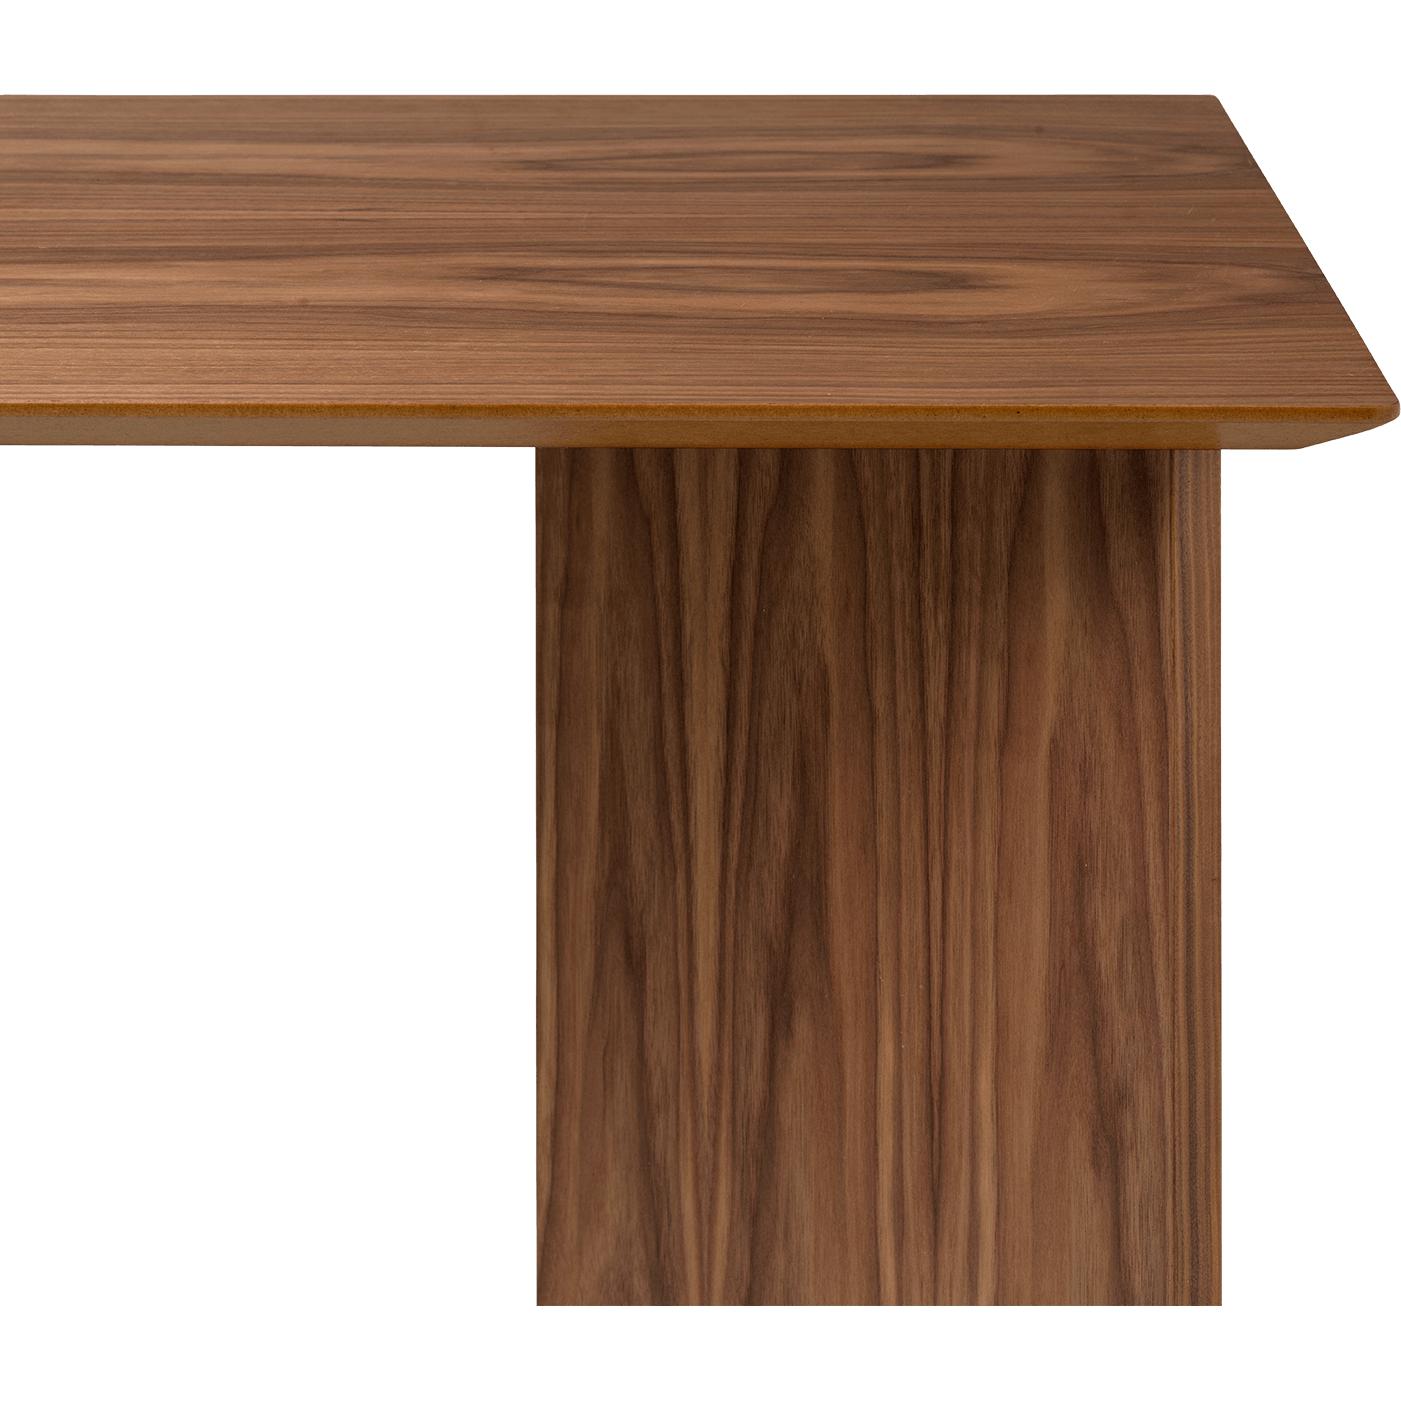 Ferm Living Mingle Tischplatte Nussbaum, 160 Cm